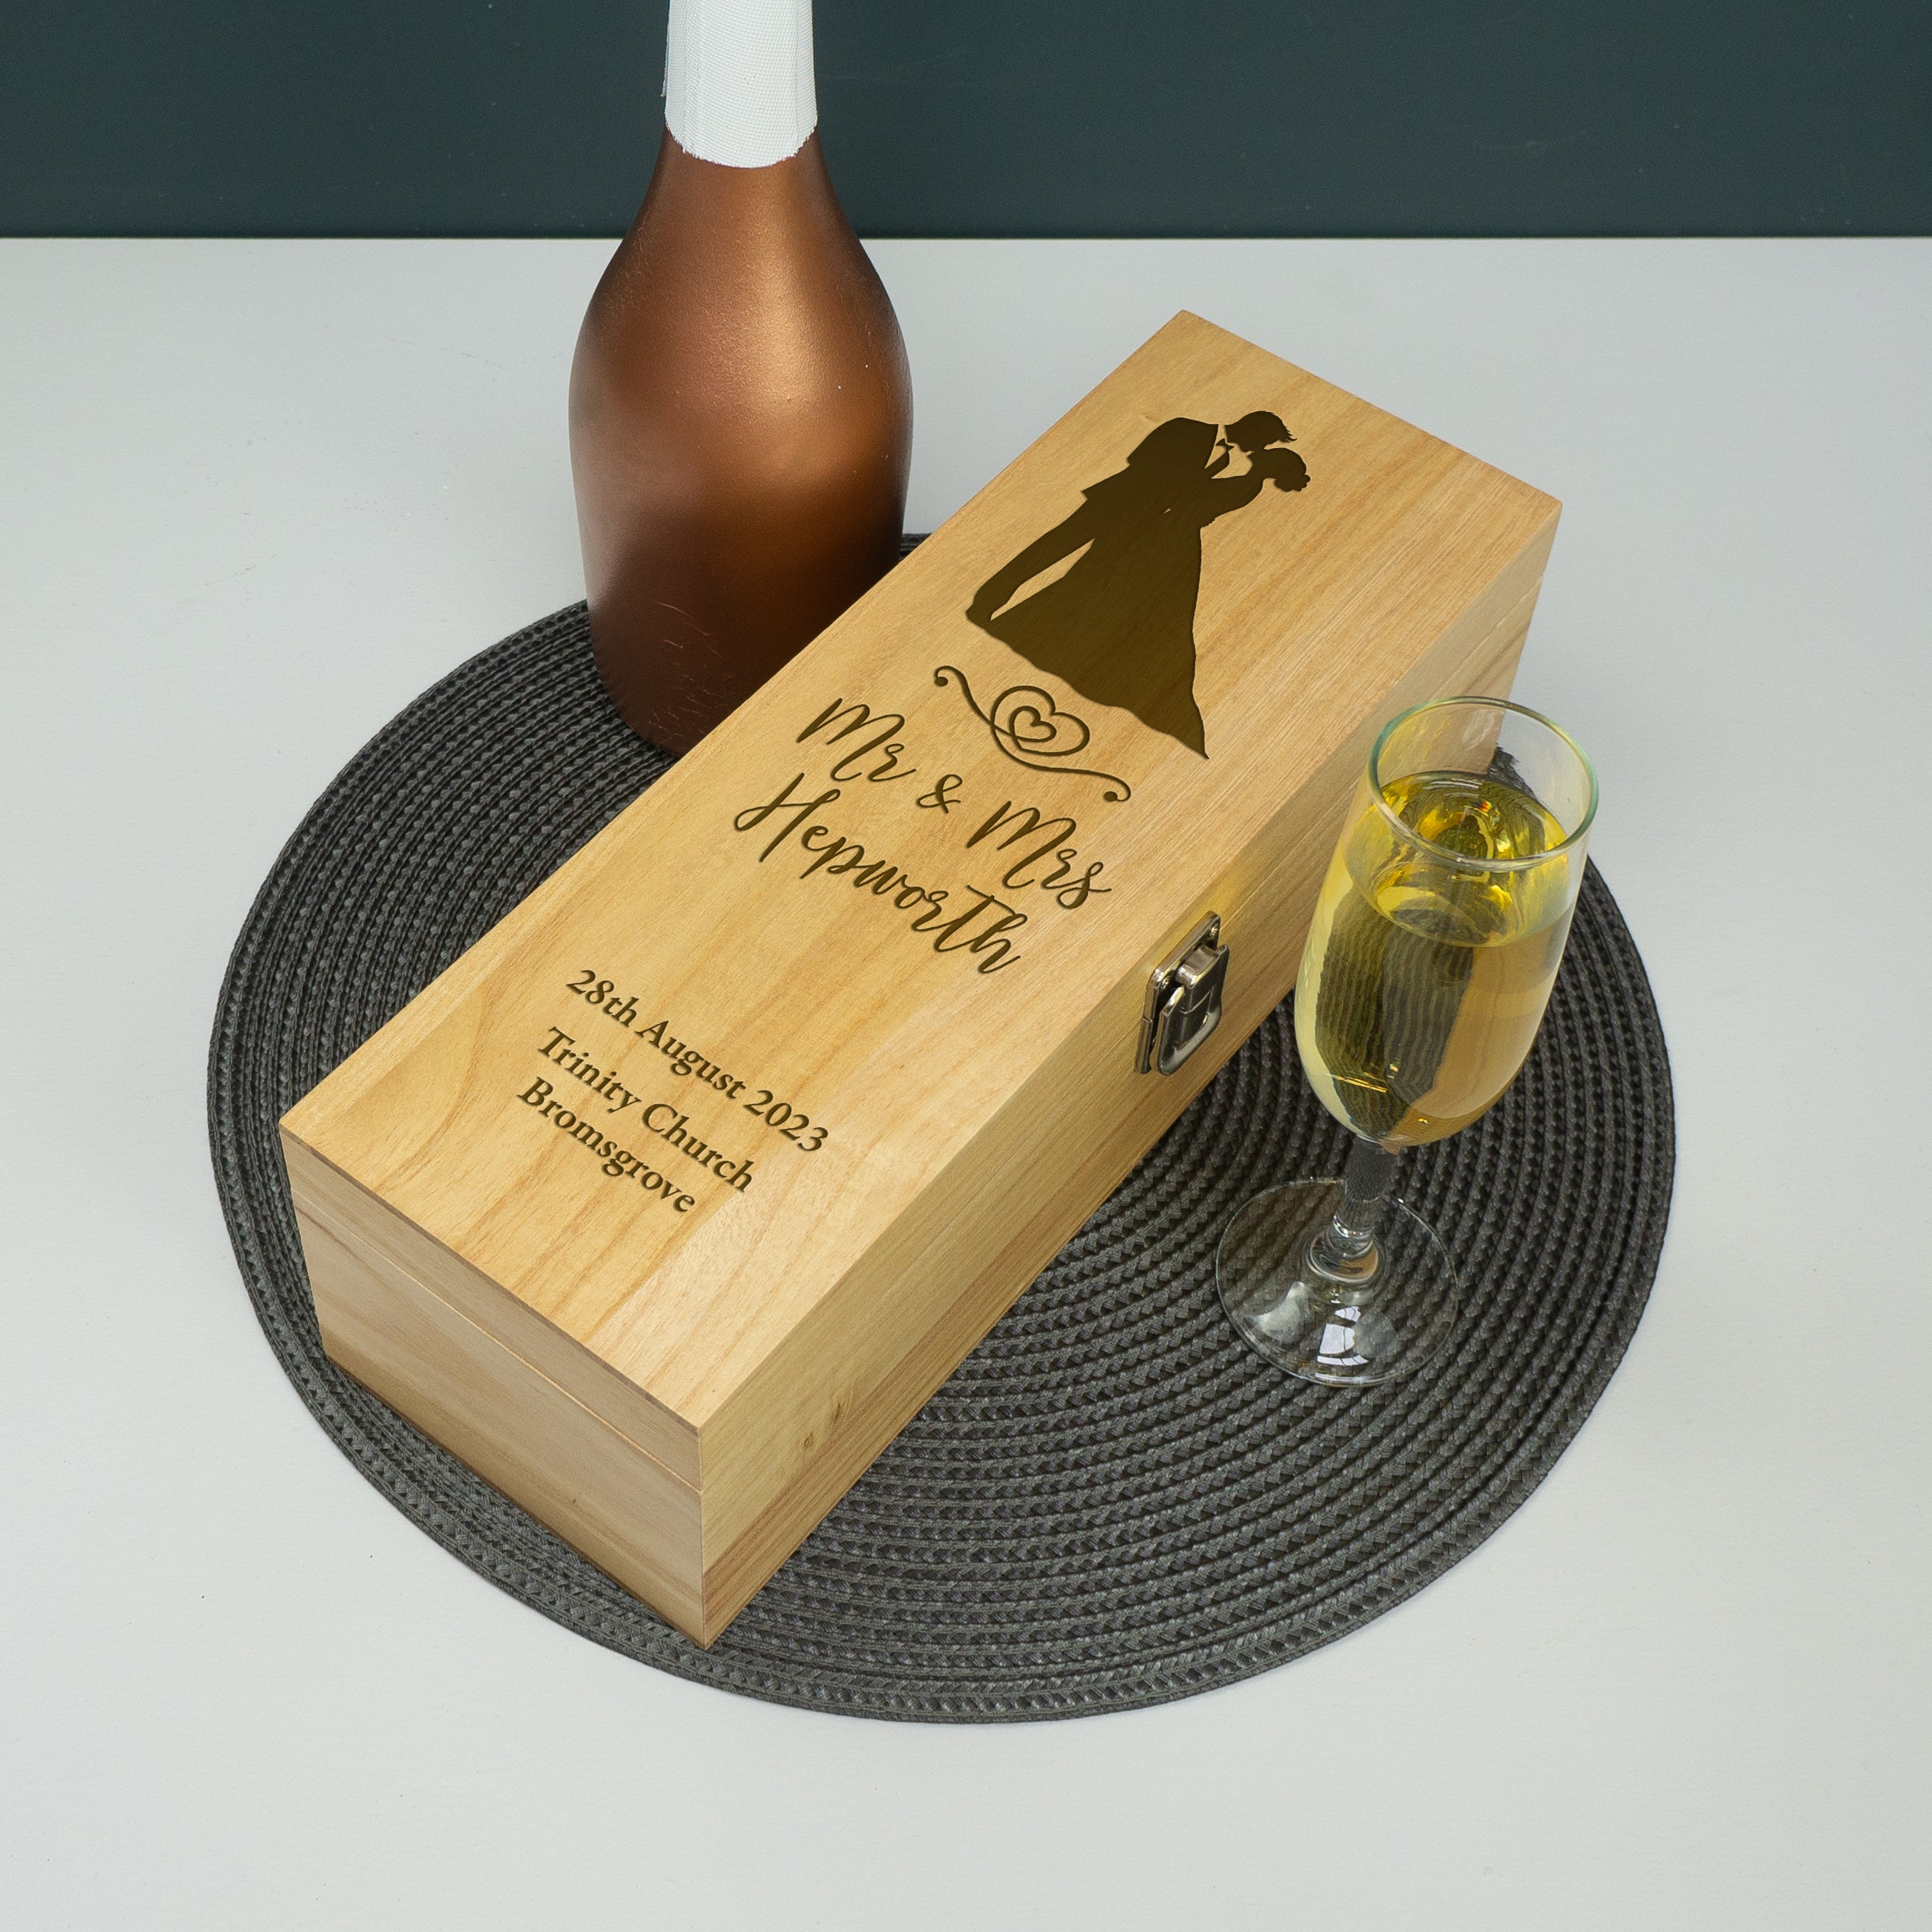 Personalised Mr and Mrs wedding alcohol bottle gifting box